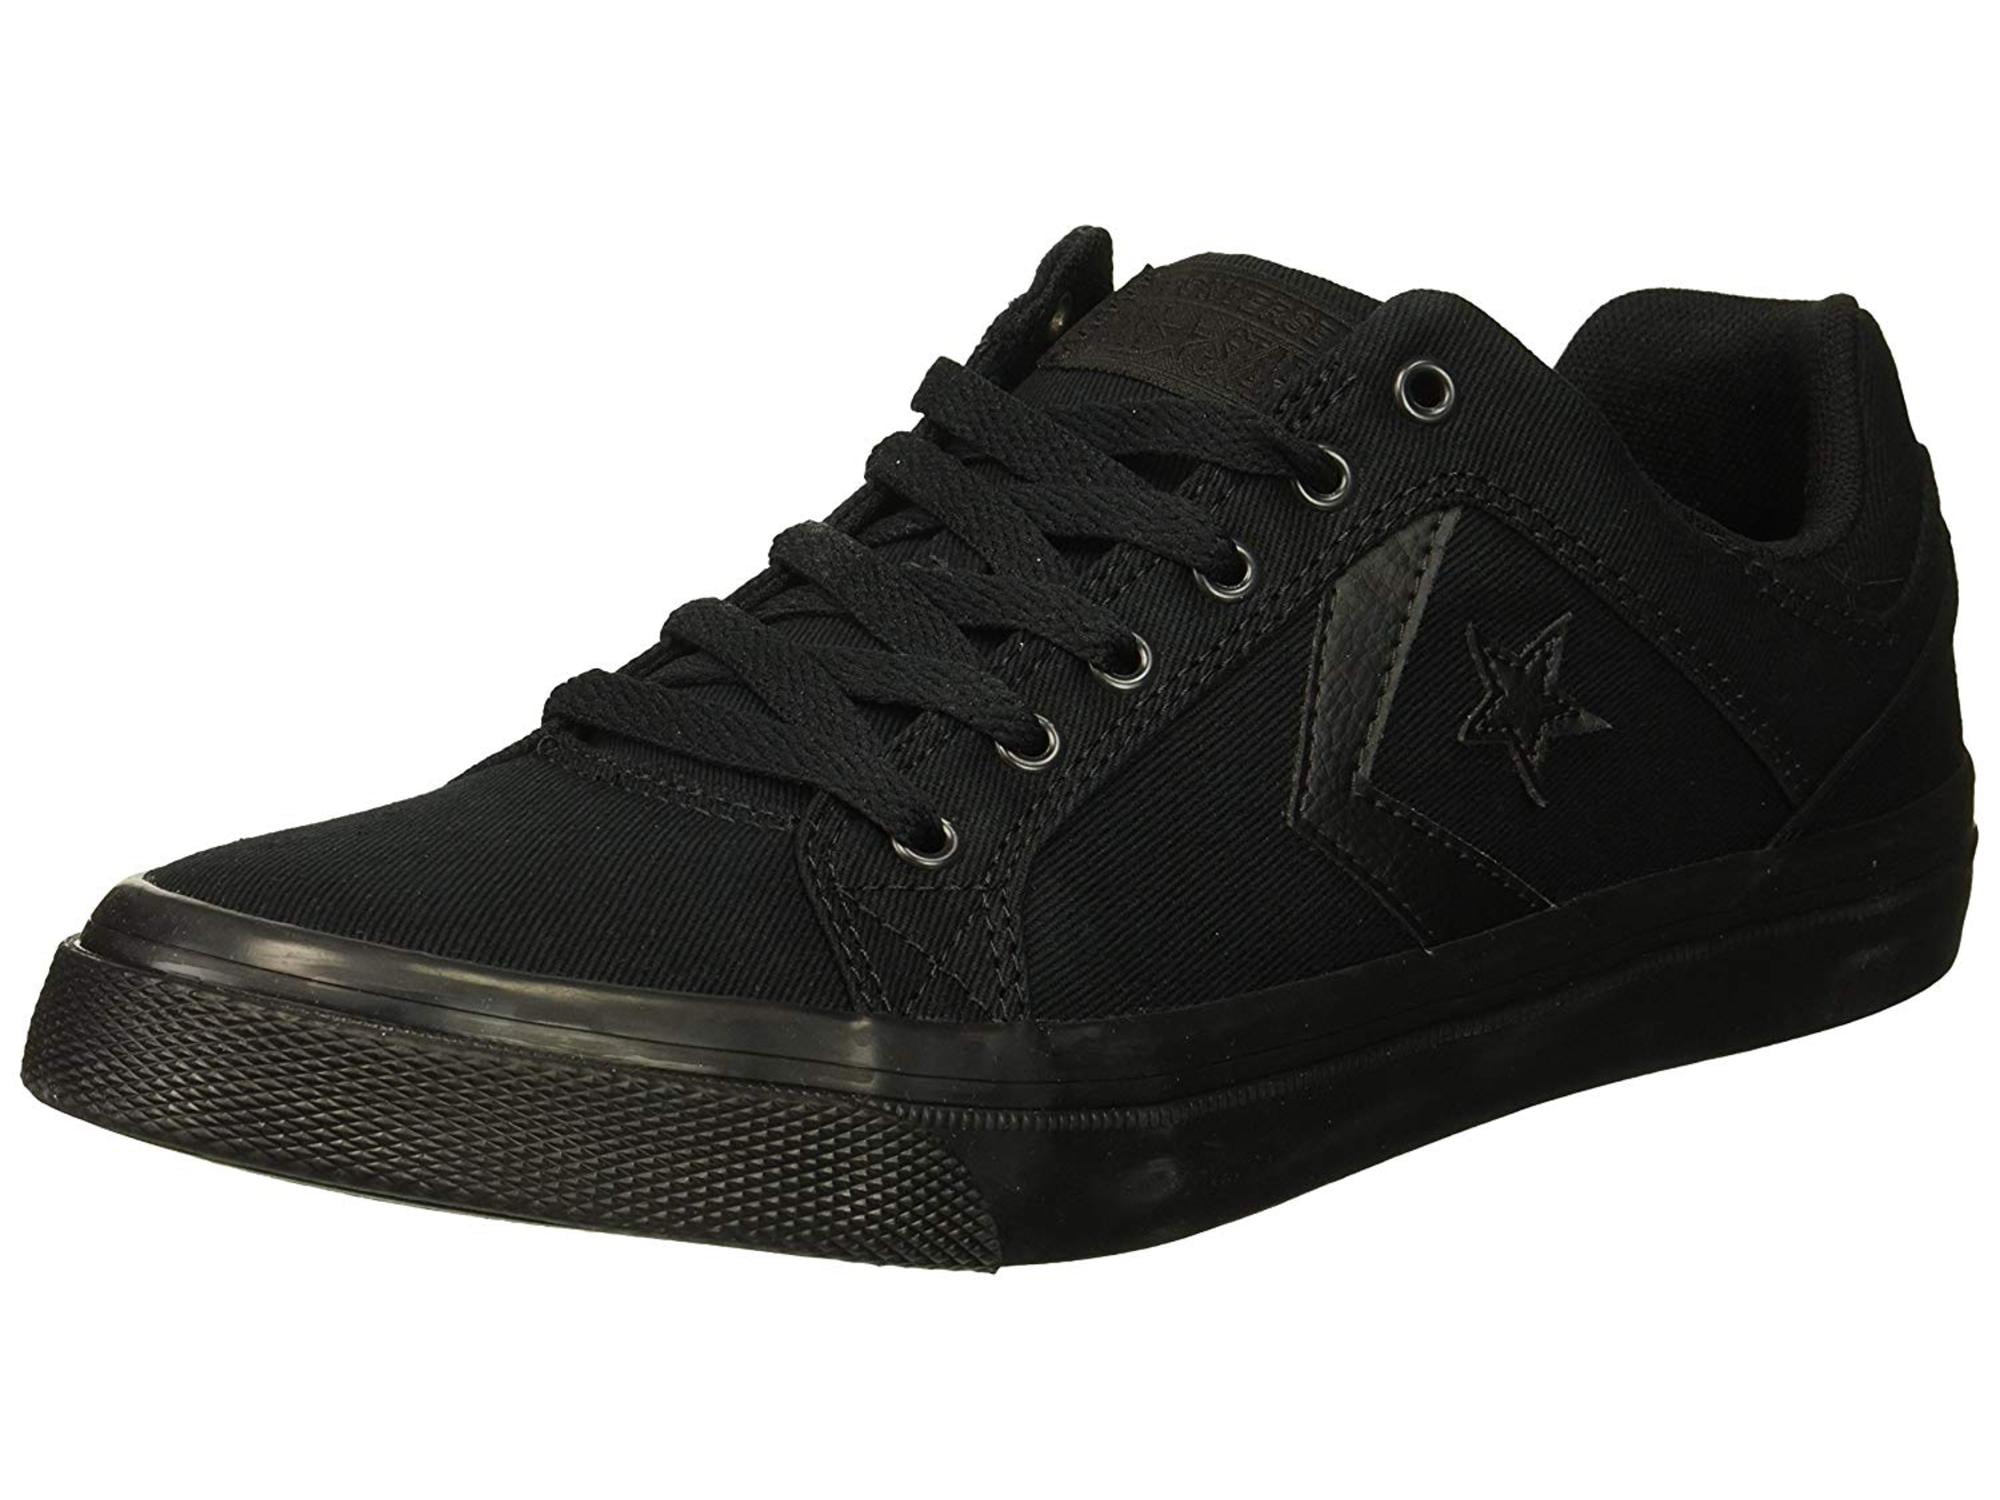 converse leather black size 5